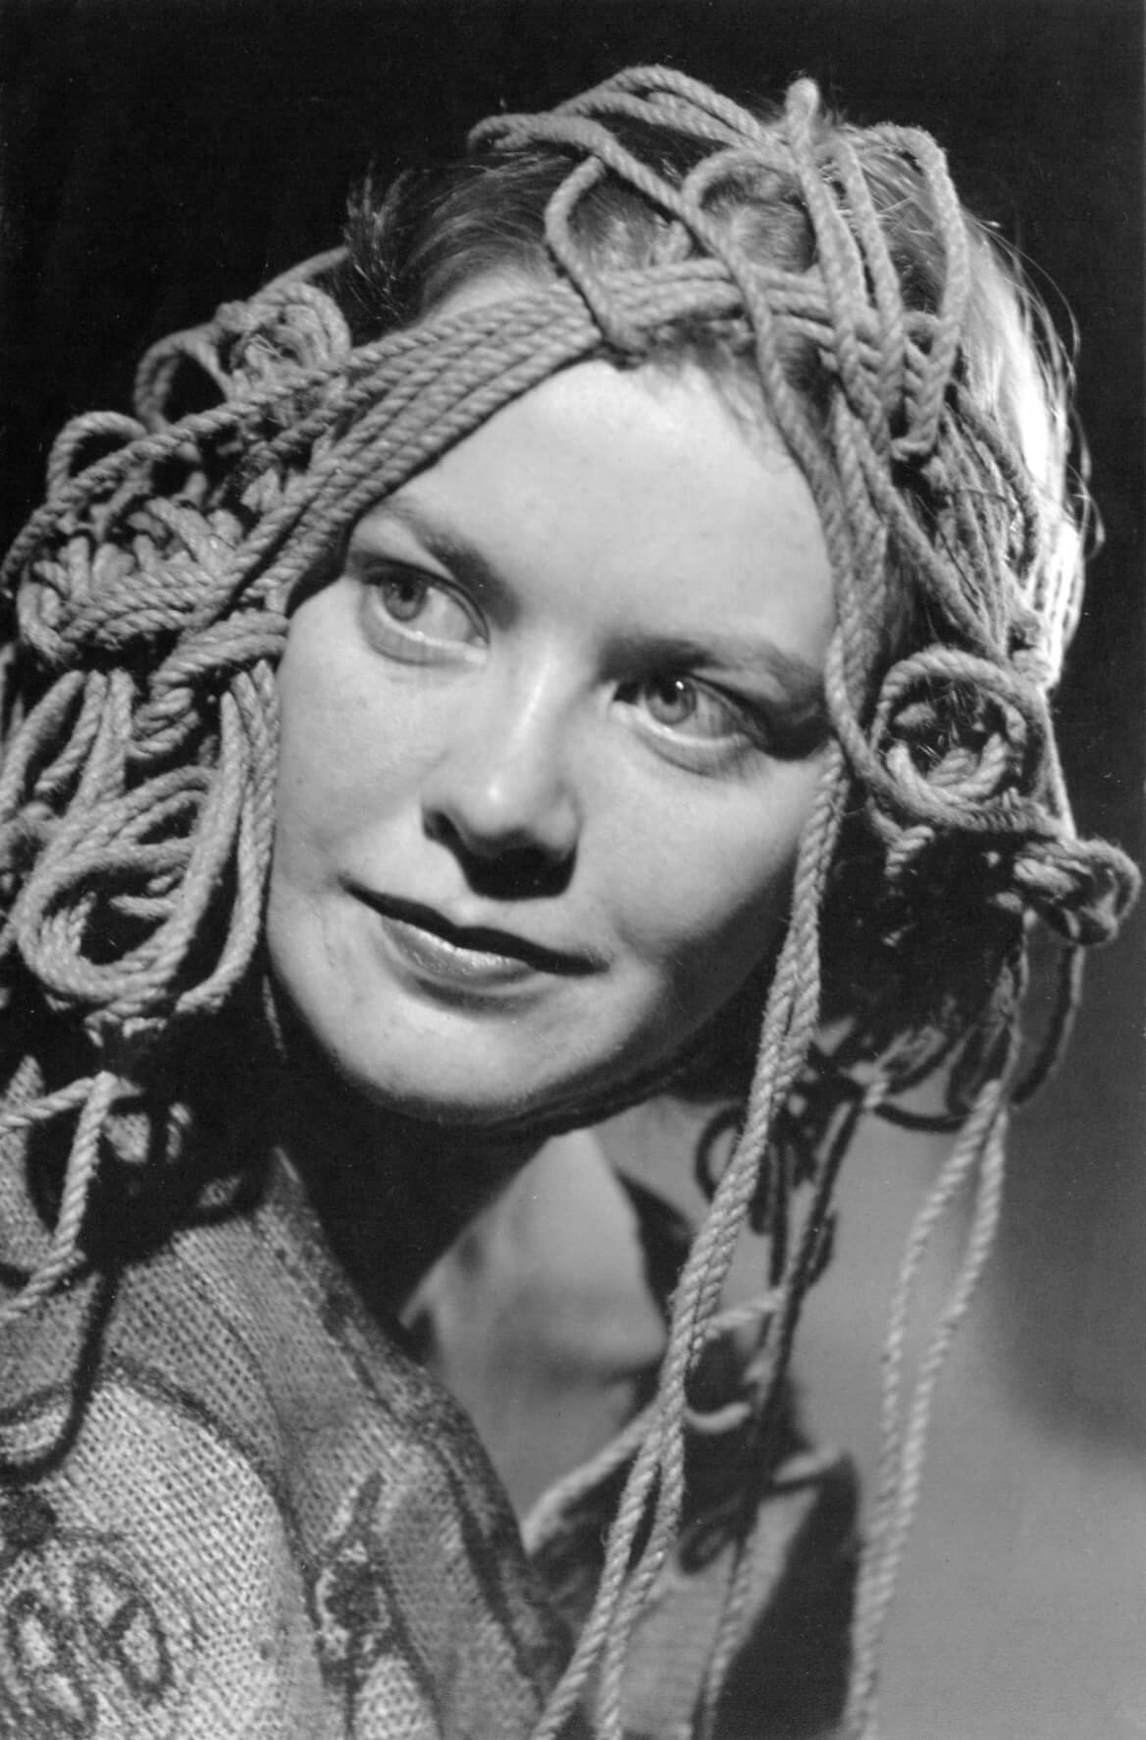 Françoise Sullivan wearing the costume Jean-Paul Mousseau designed for Black and Tan, 1949.